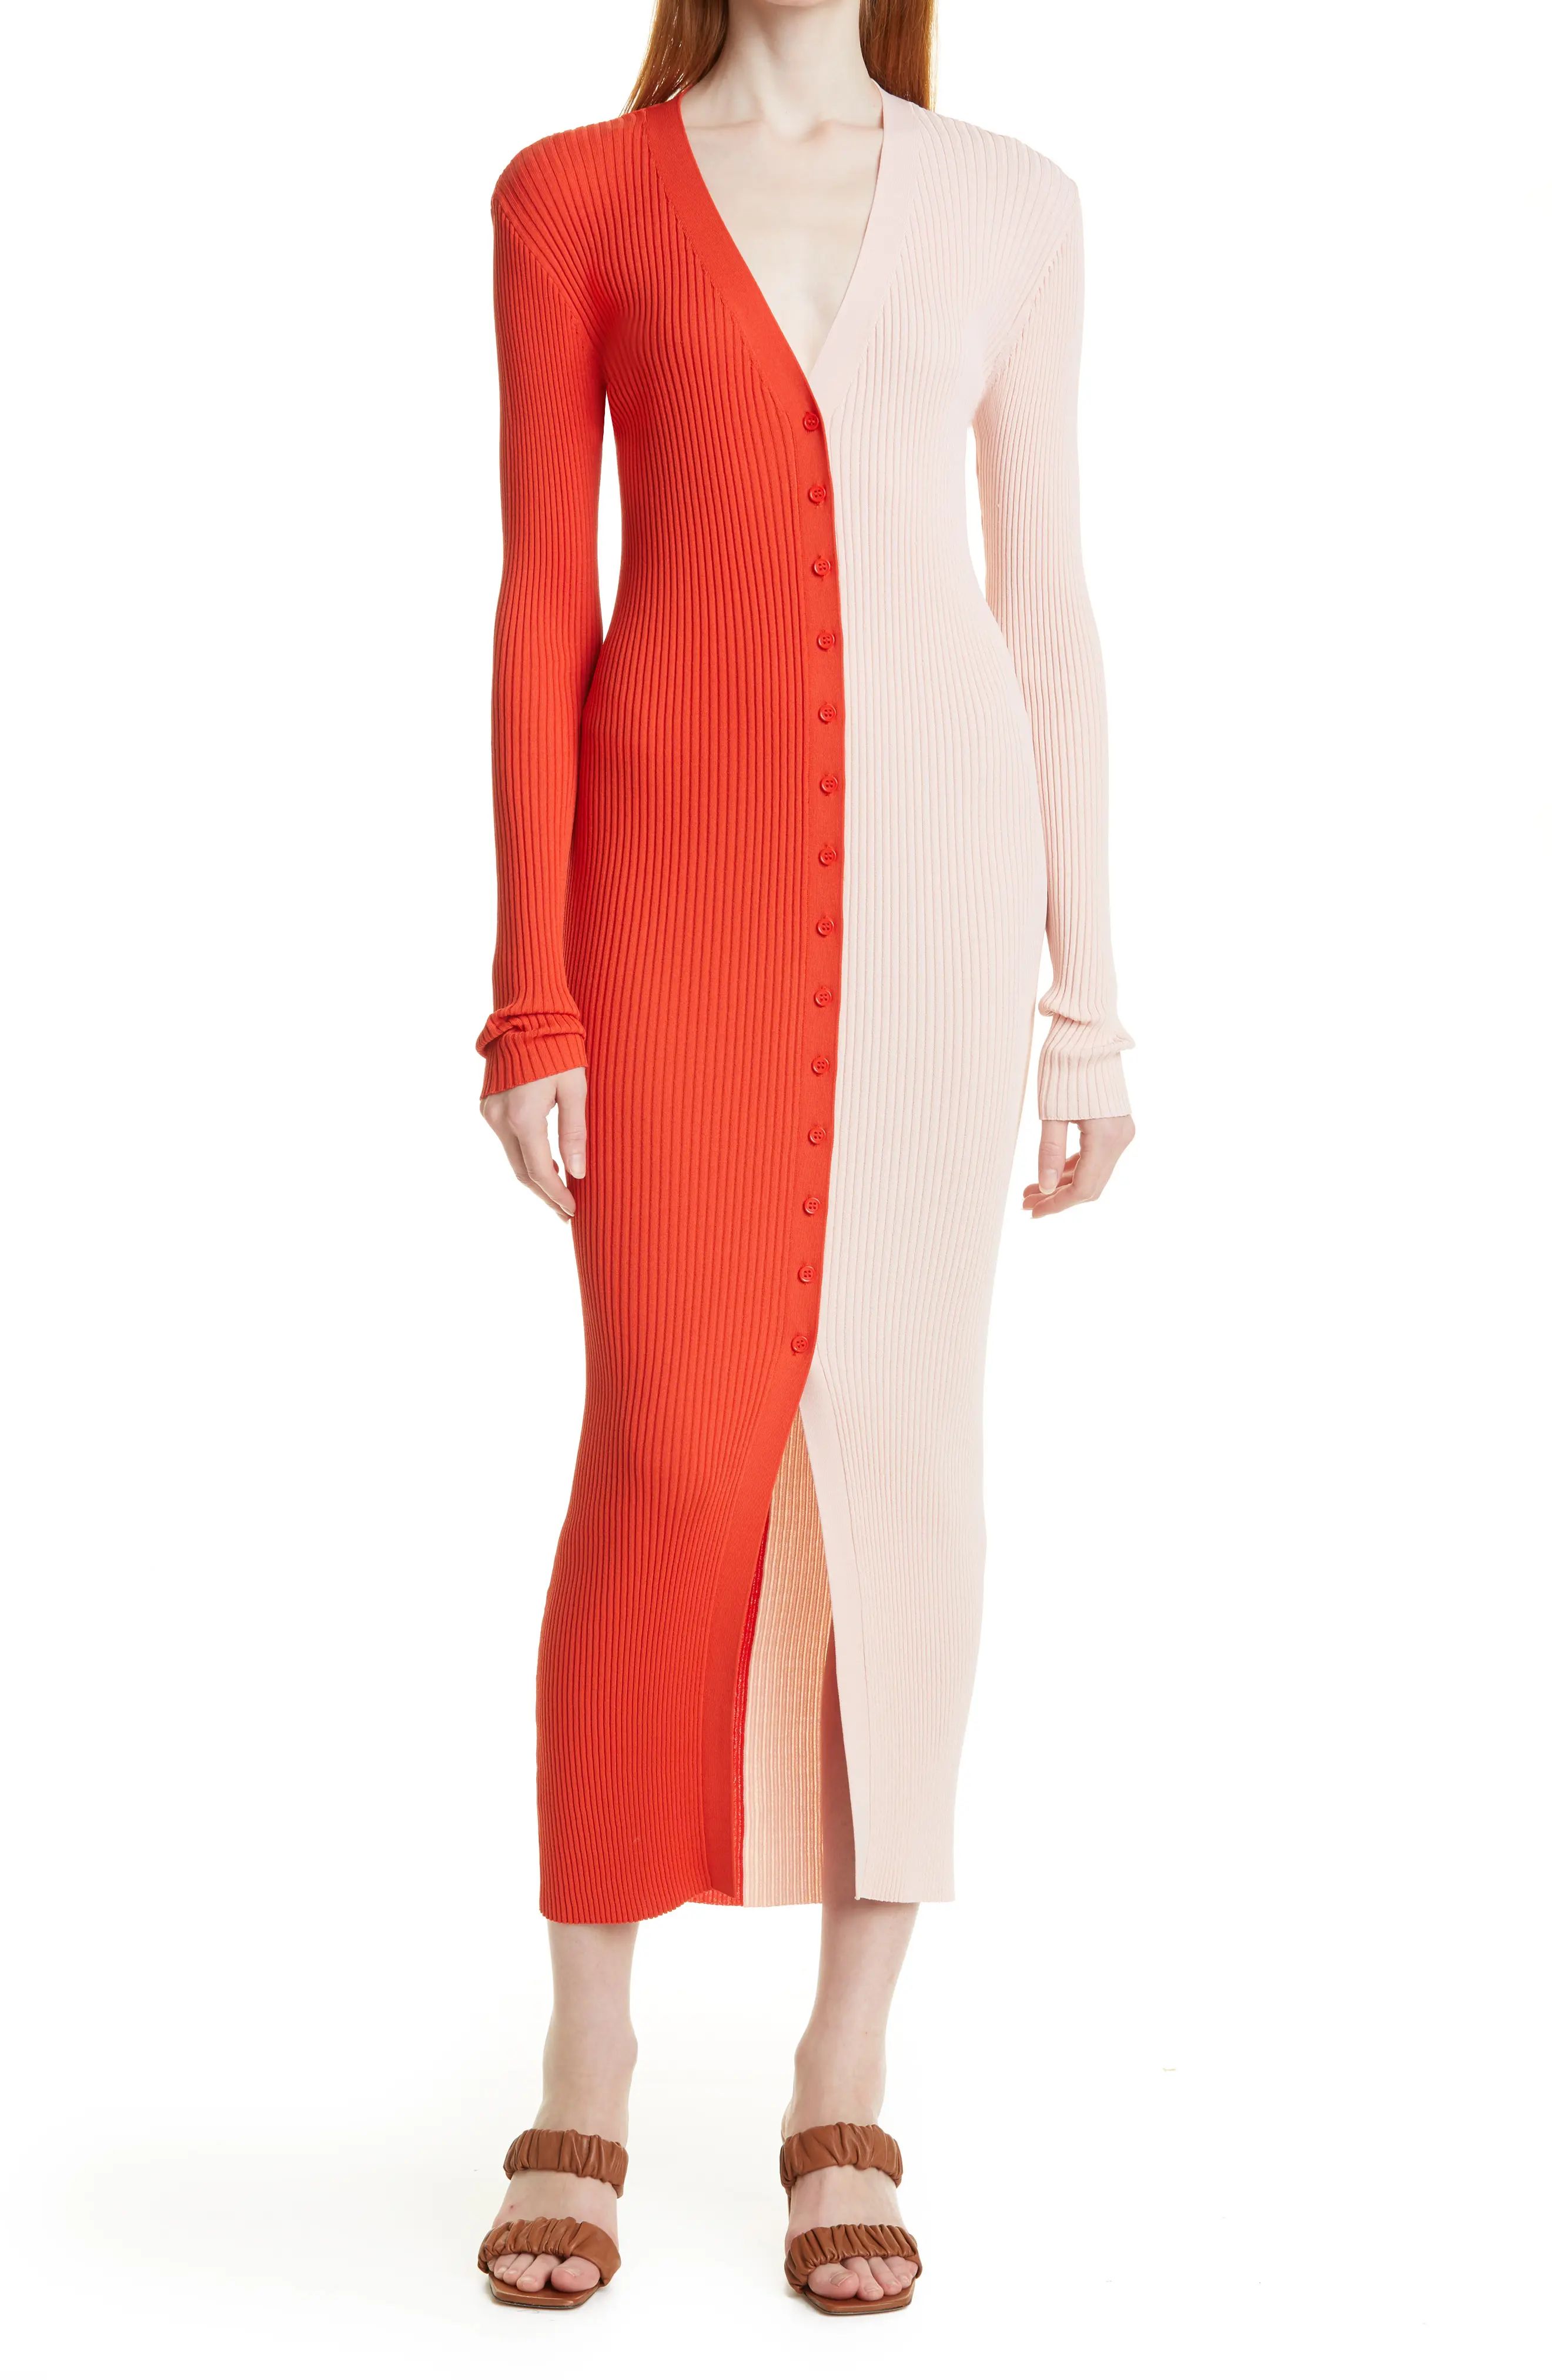 STAUD Shoko Colorblock Sweater, Size X-Large in Orange/Light Pink at Nordstrom | Nordstrom